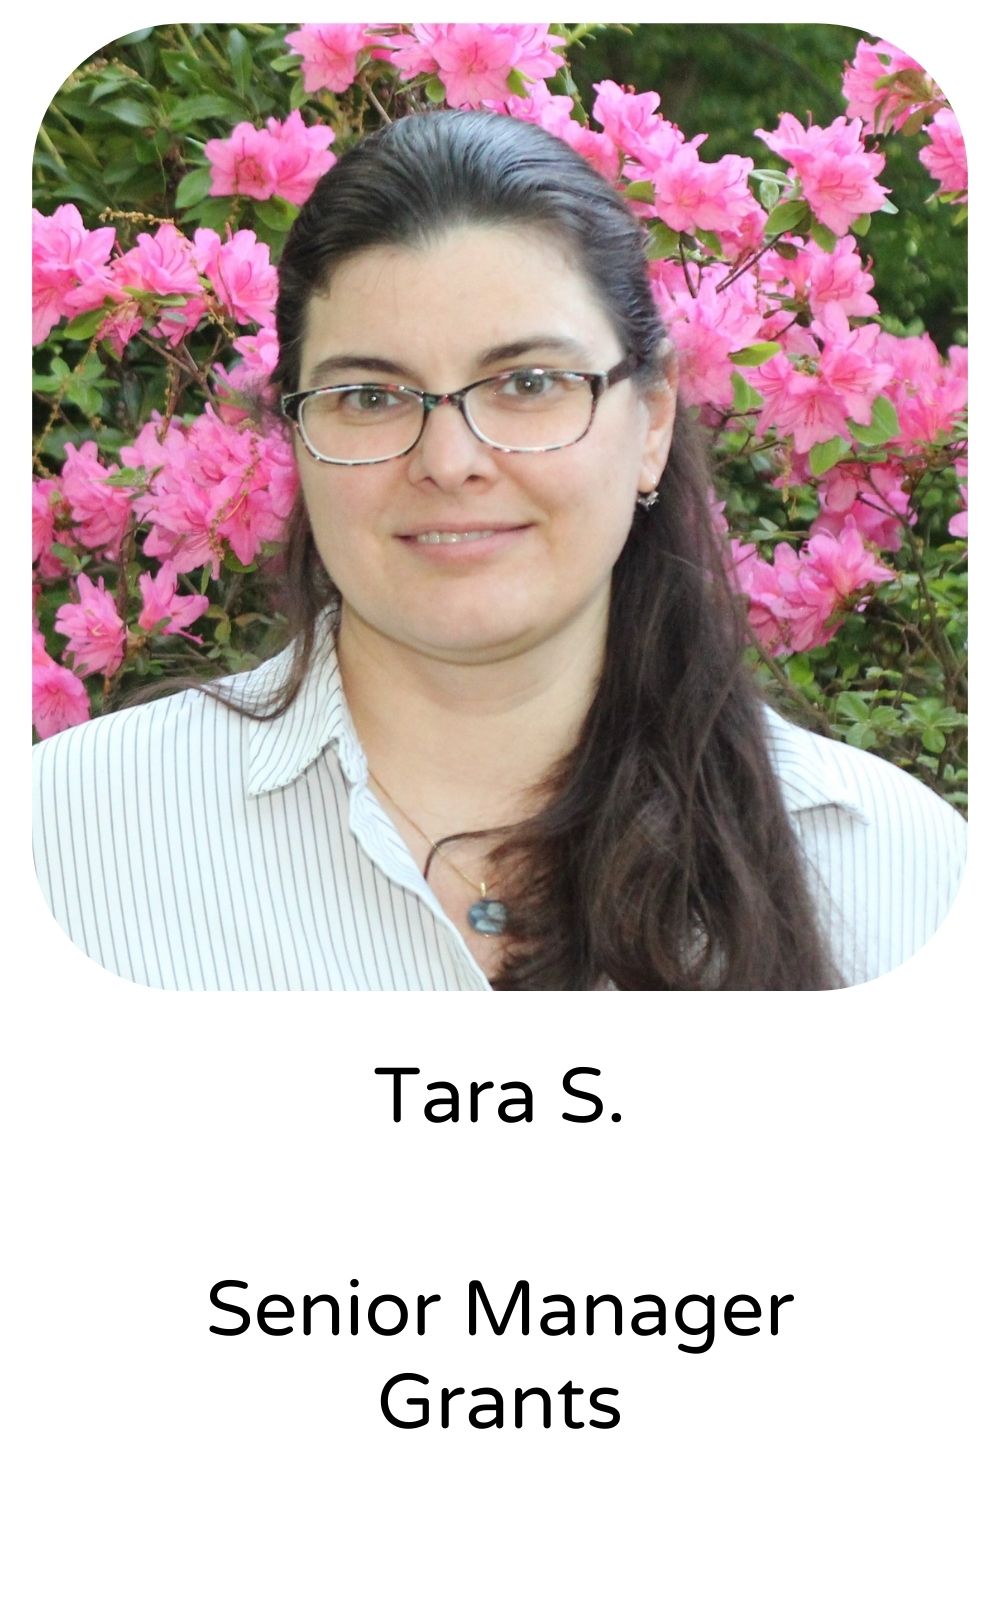 Tara S, Senior Manager, Grants